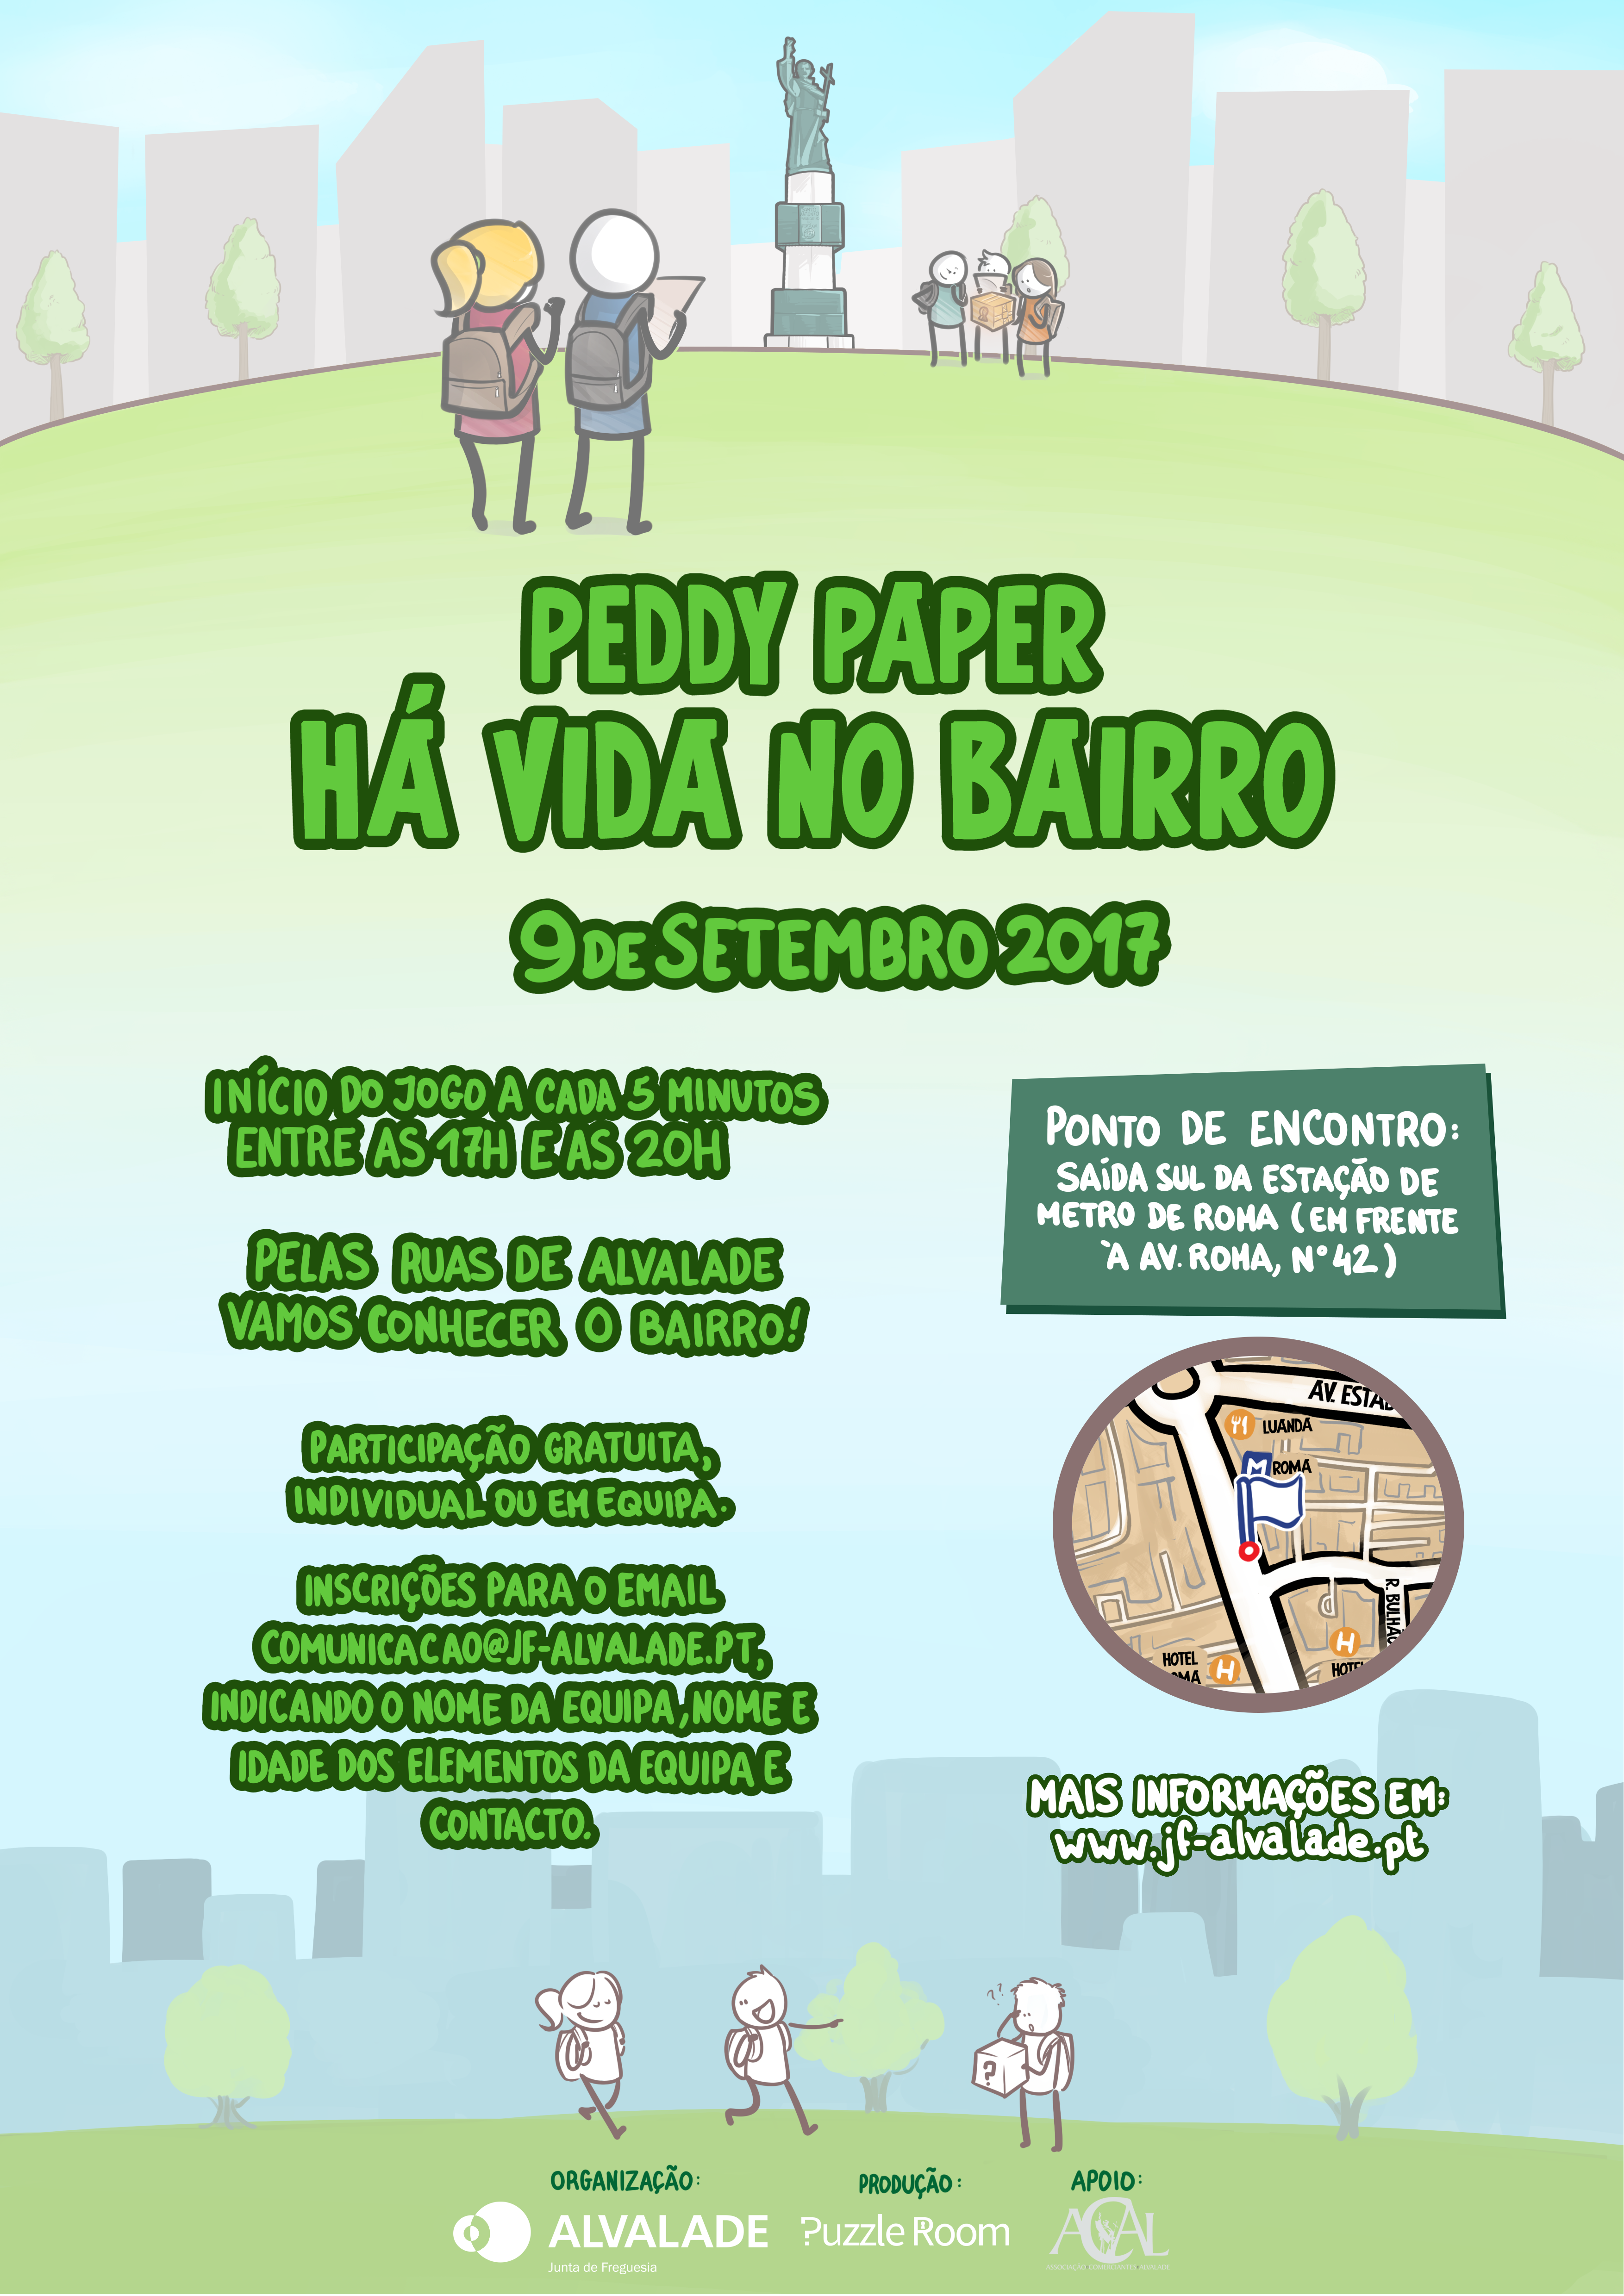 Alvalade - Peddy Paper - Há Vida no Bairro!